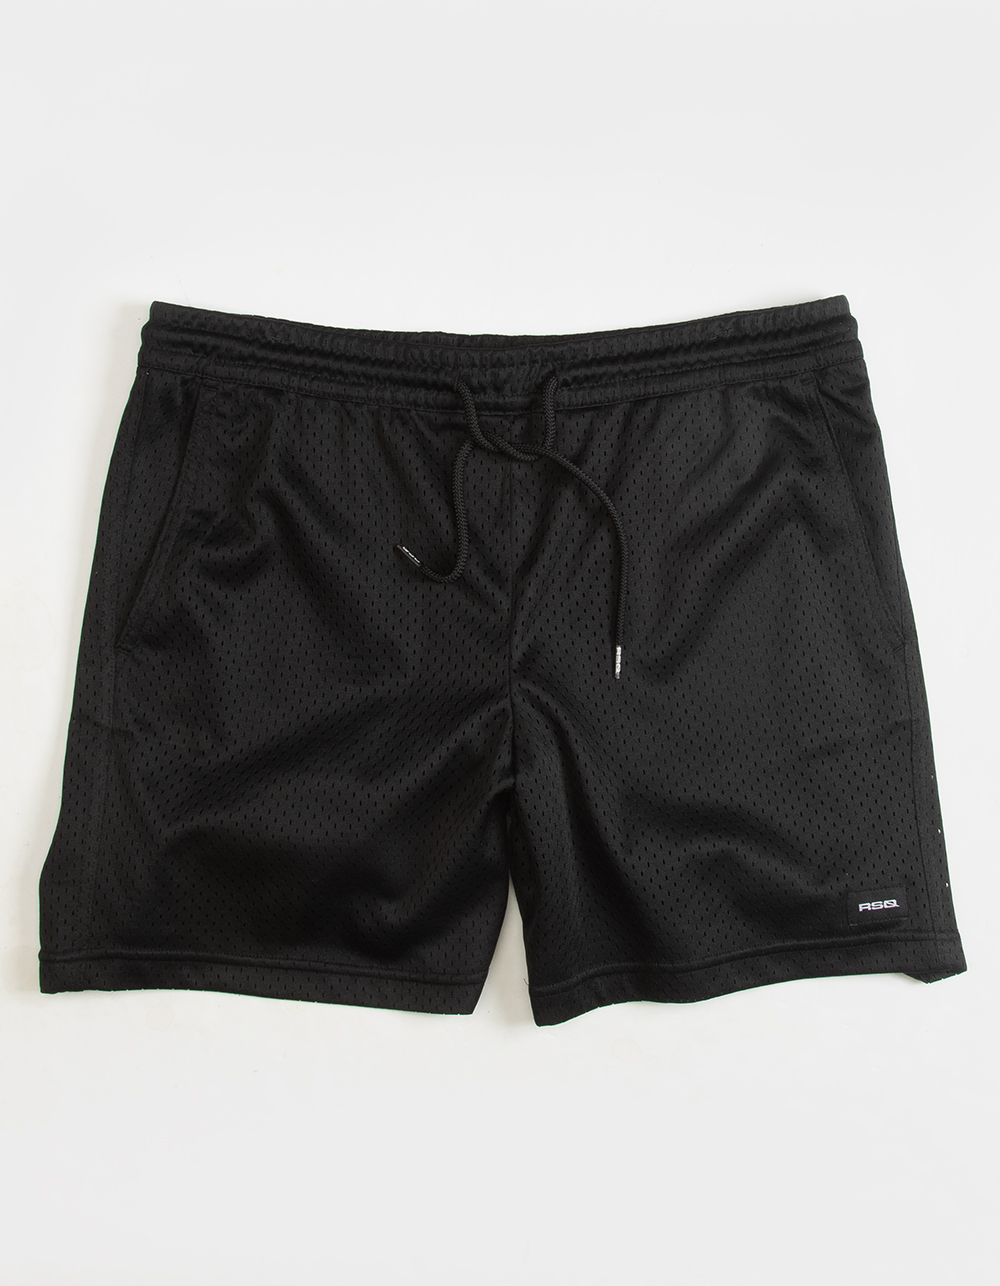 Black Mesh Shorts - Lowes Menswear